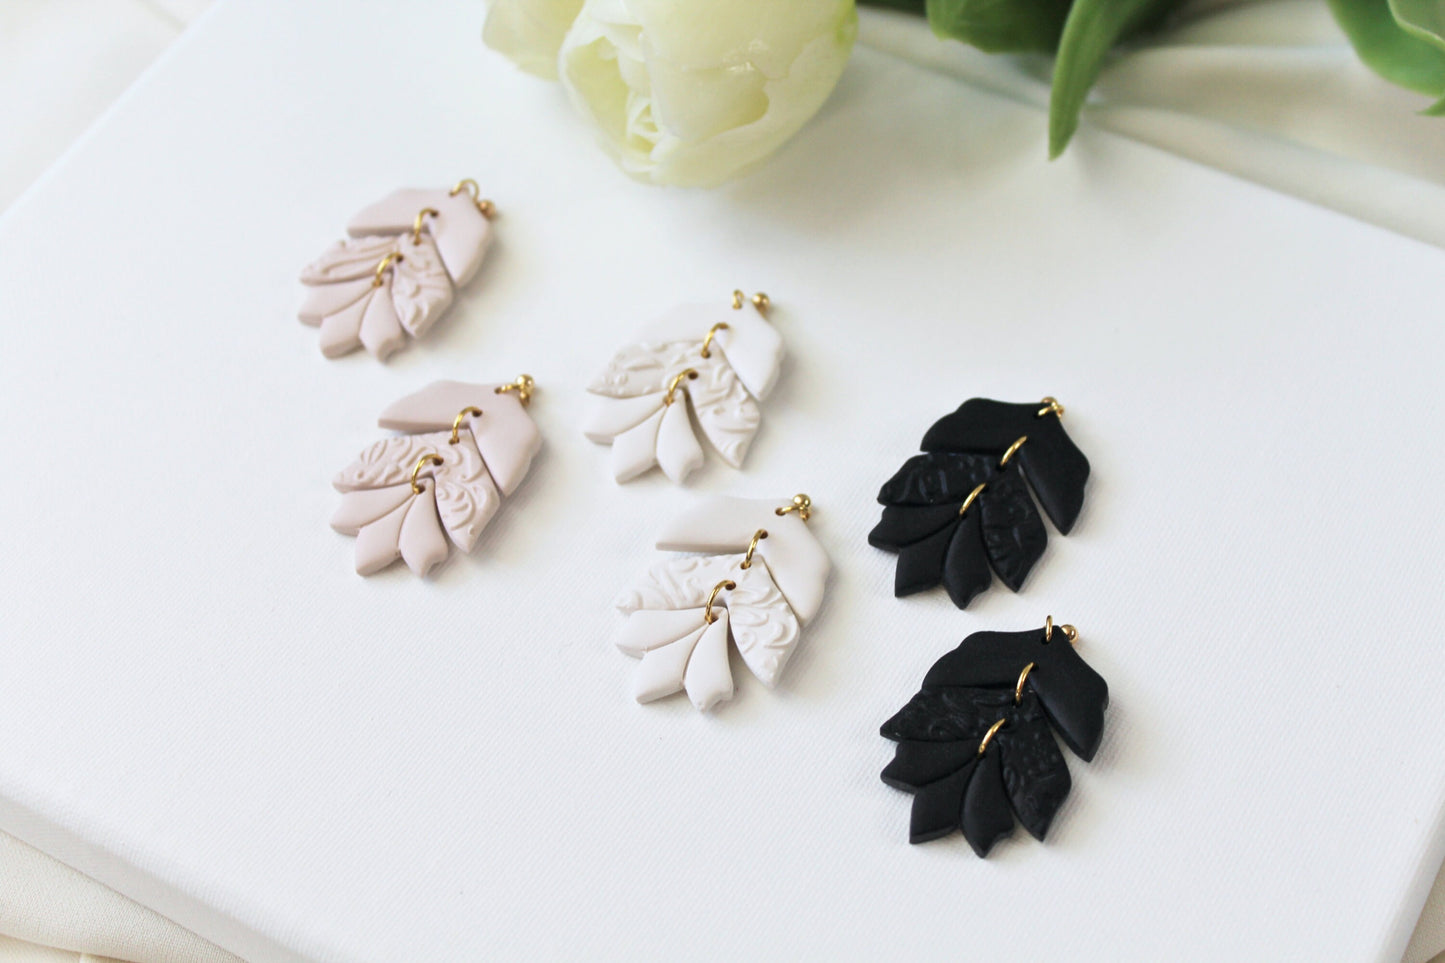 Earrings Polymer Clay, Leaf Earrings, Flower Earrings, Statement Earrings, Nature Inspired, Clay Earrings Handmade, Beige, White, Black,Gift